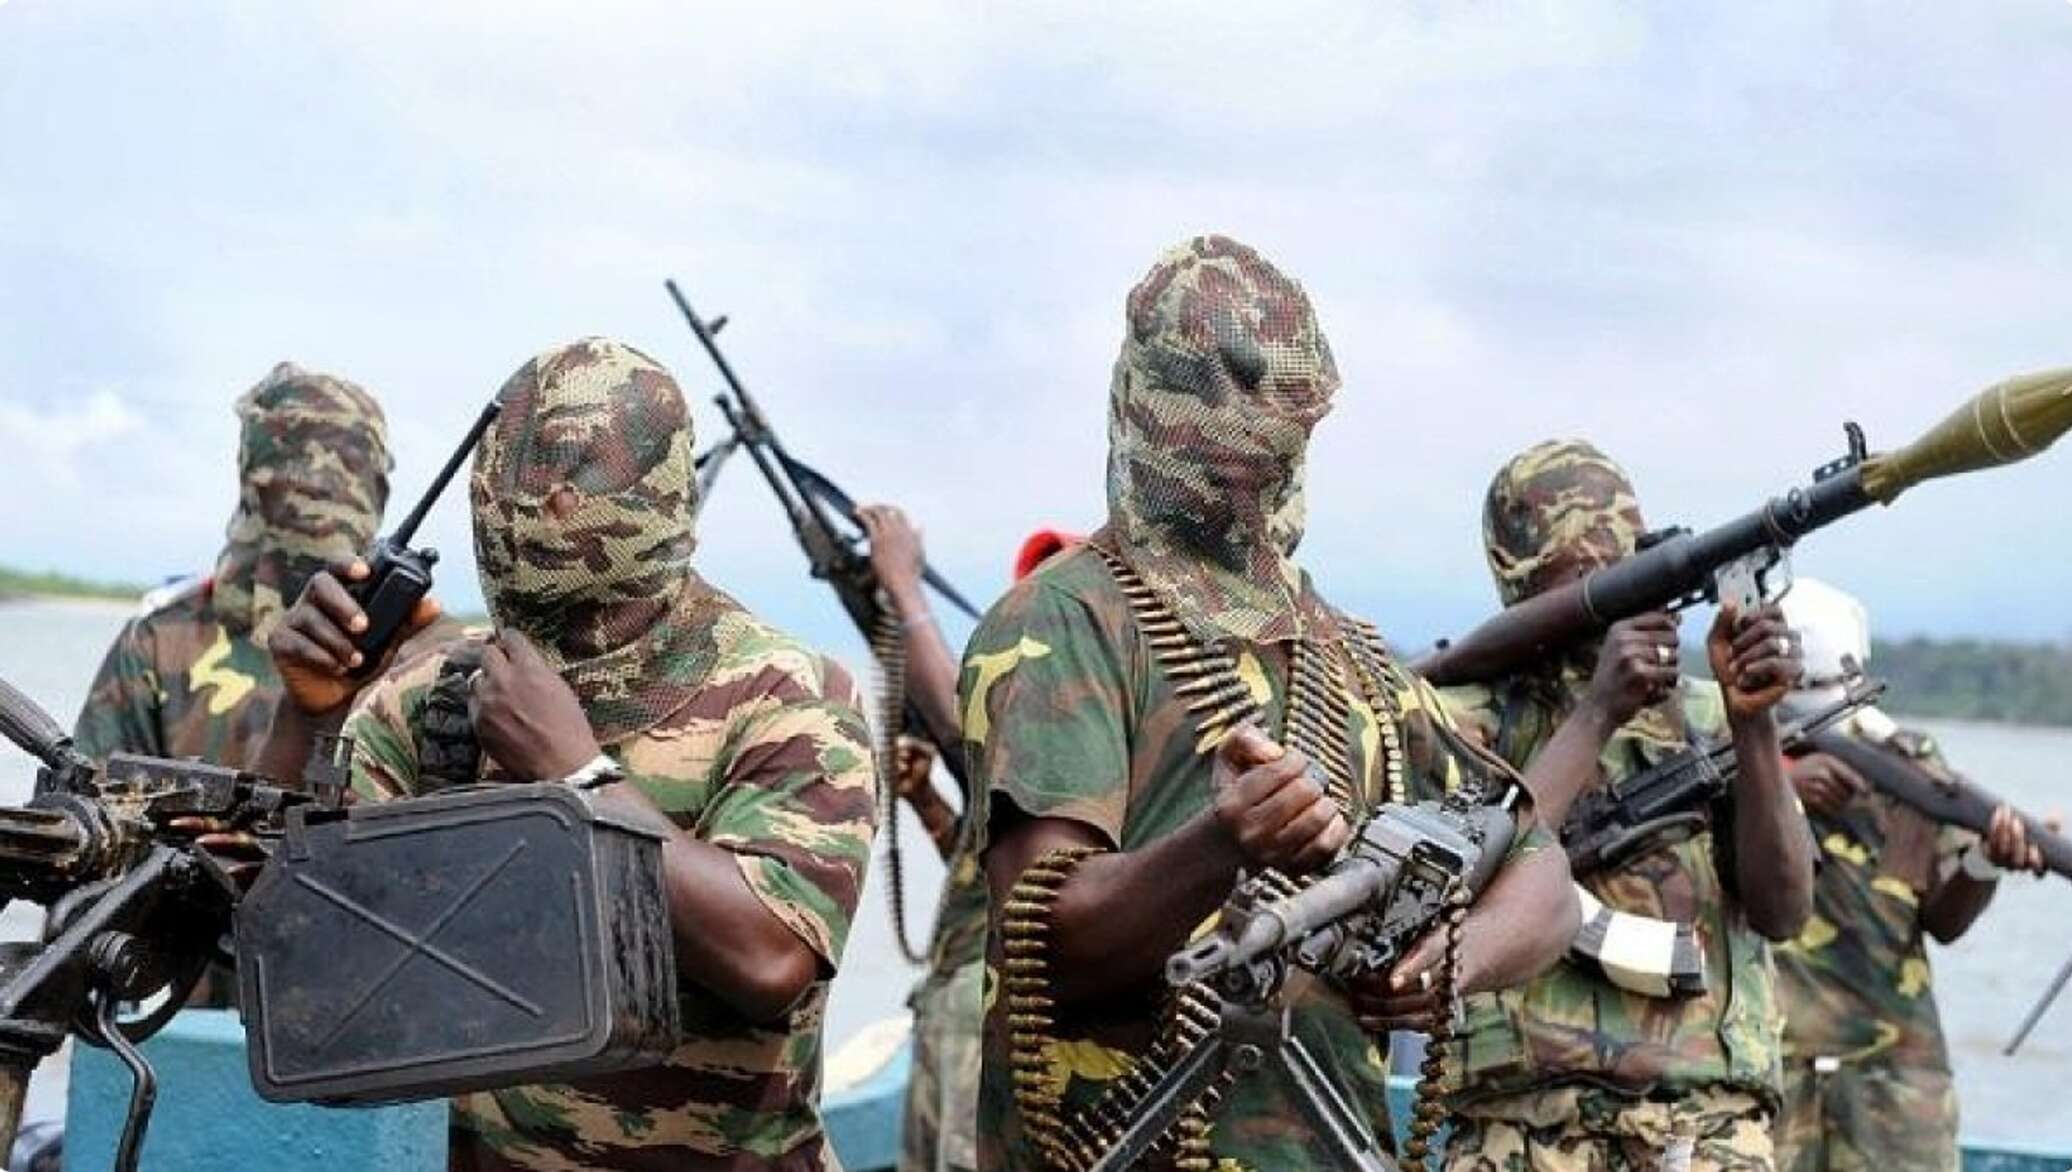 Террористические нападения. Лидер группировки "Боко харам" Абубакар Шекау. Атака Боко-харам в Нигерии.